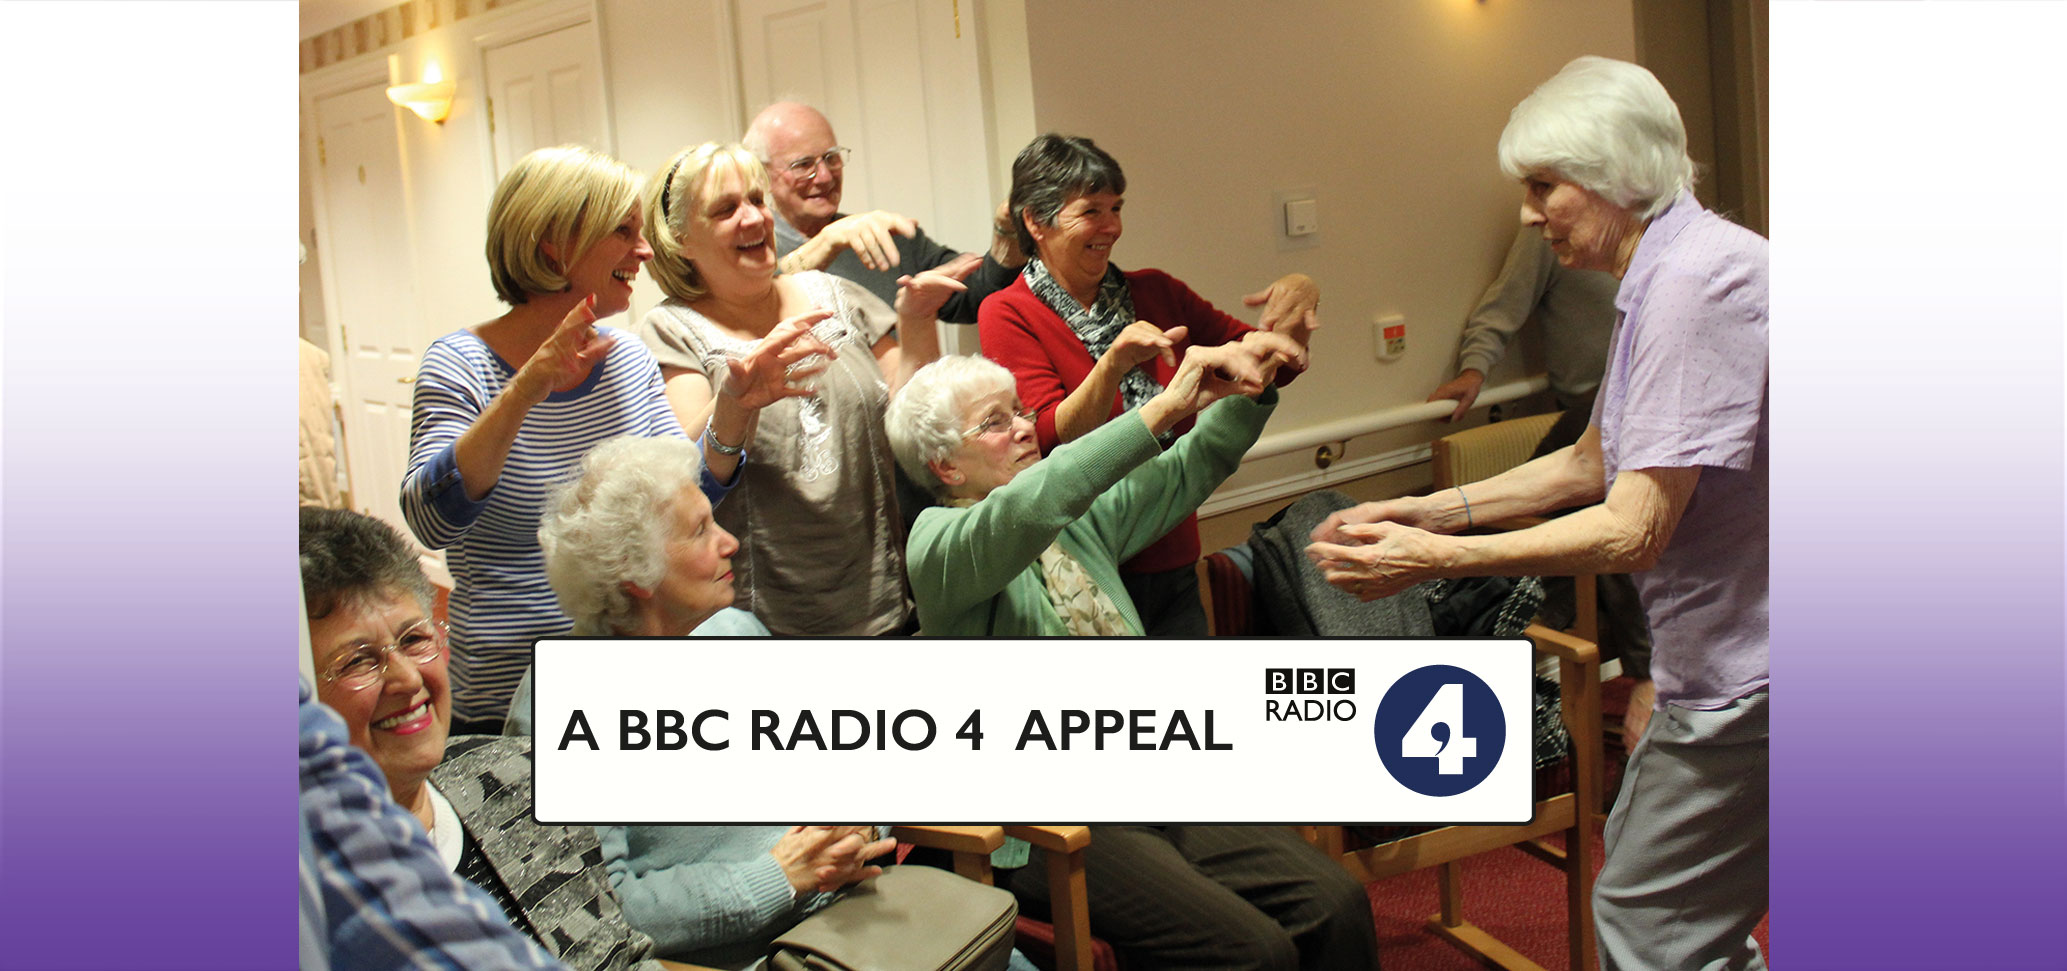 Lesley Garrett's BBC Radio 4 Appeal for Lost Chord Dementia Charity